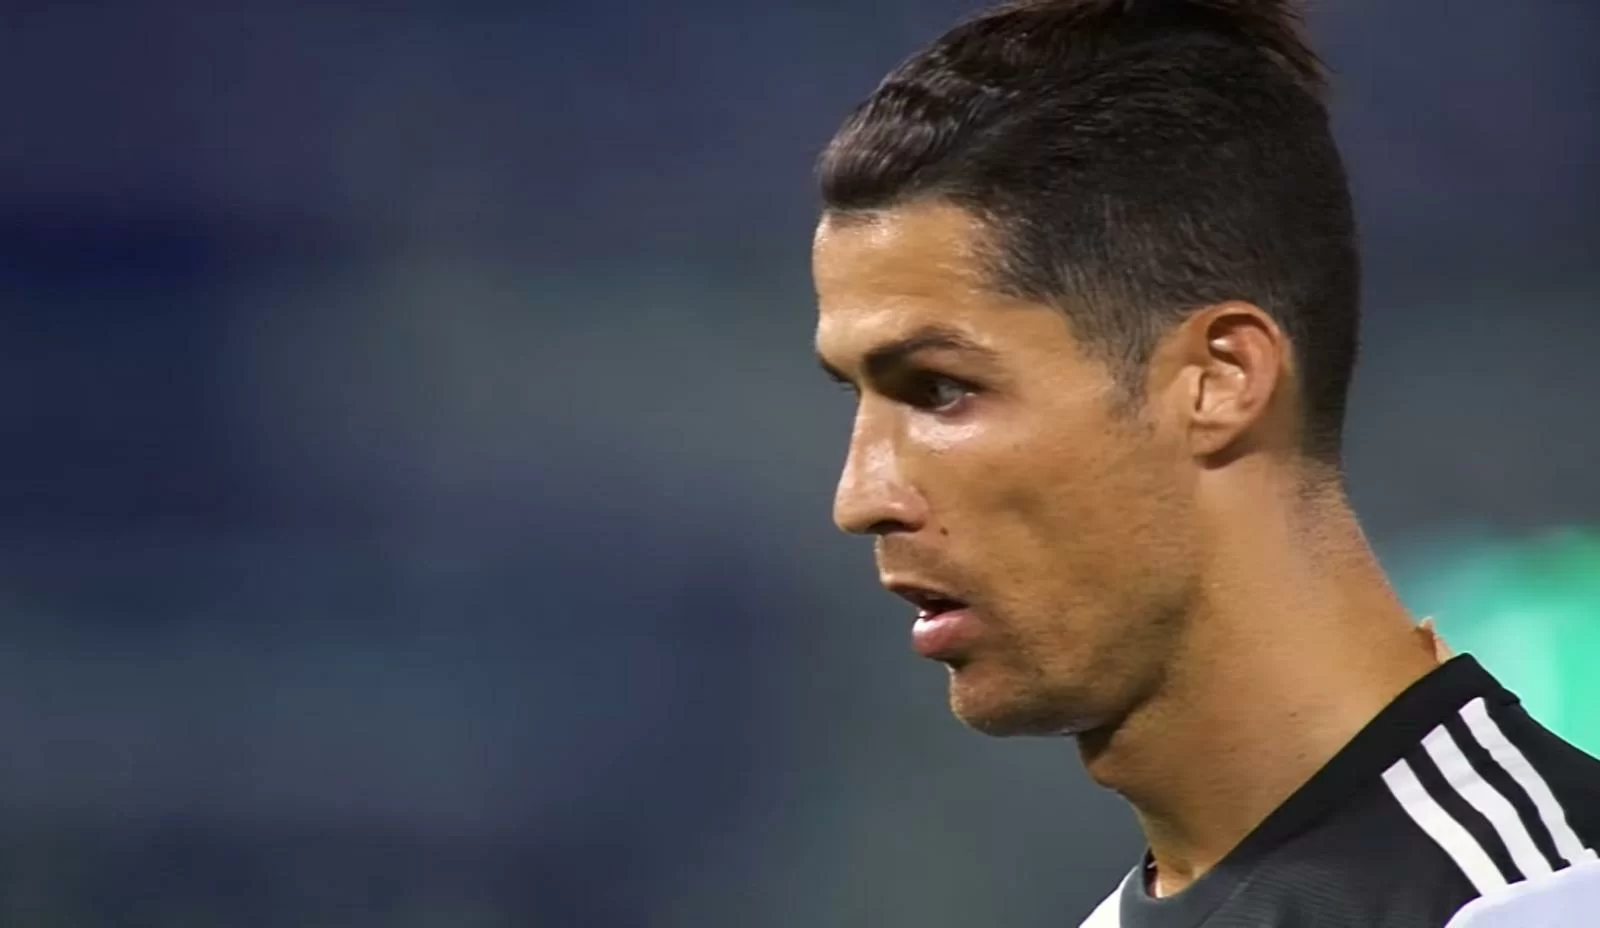 Ronaldo senza mascherina in tribuna: richiamato dallo staff Uefa